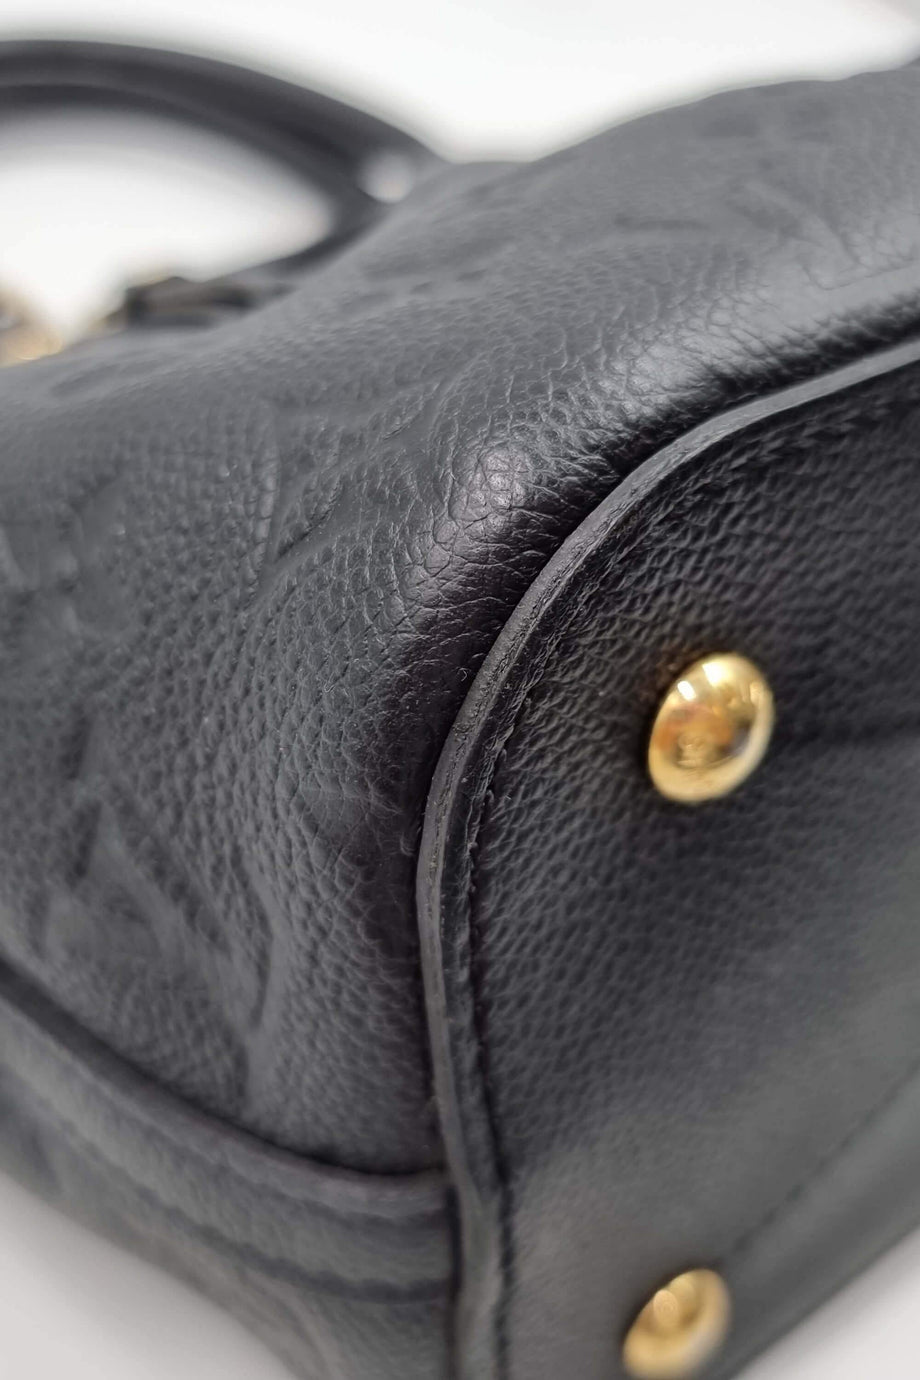 Louis Vuitton Mazarine PM bag in black & embossed leather. Similar